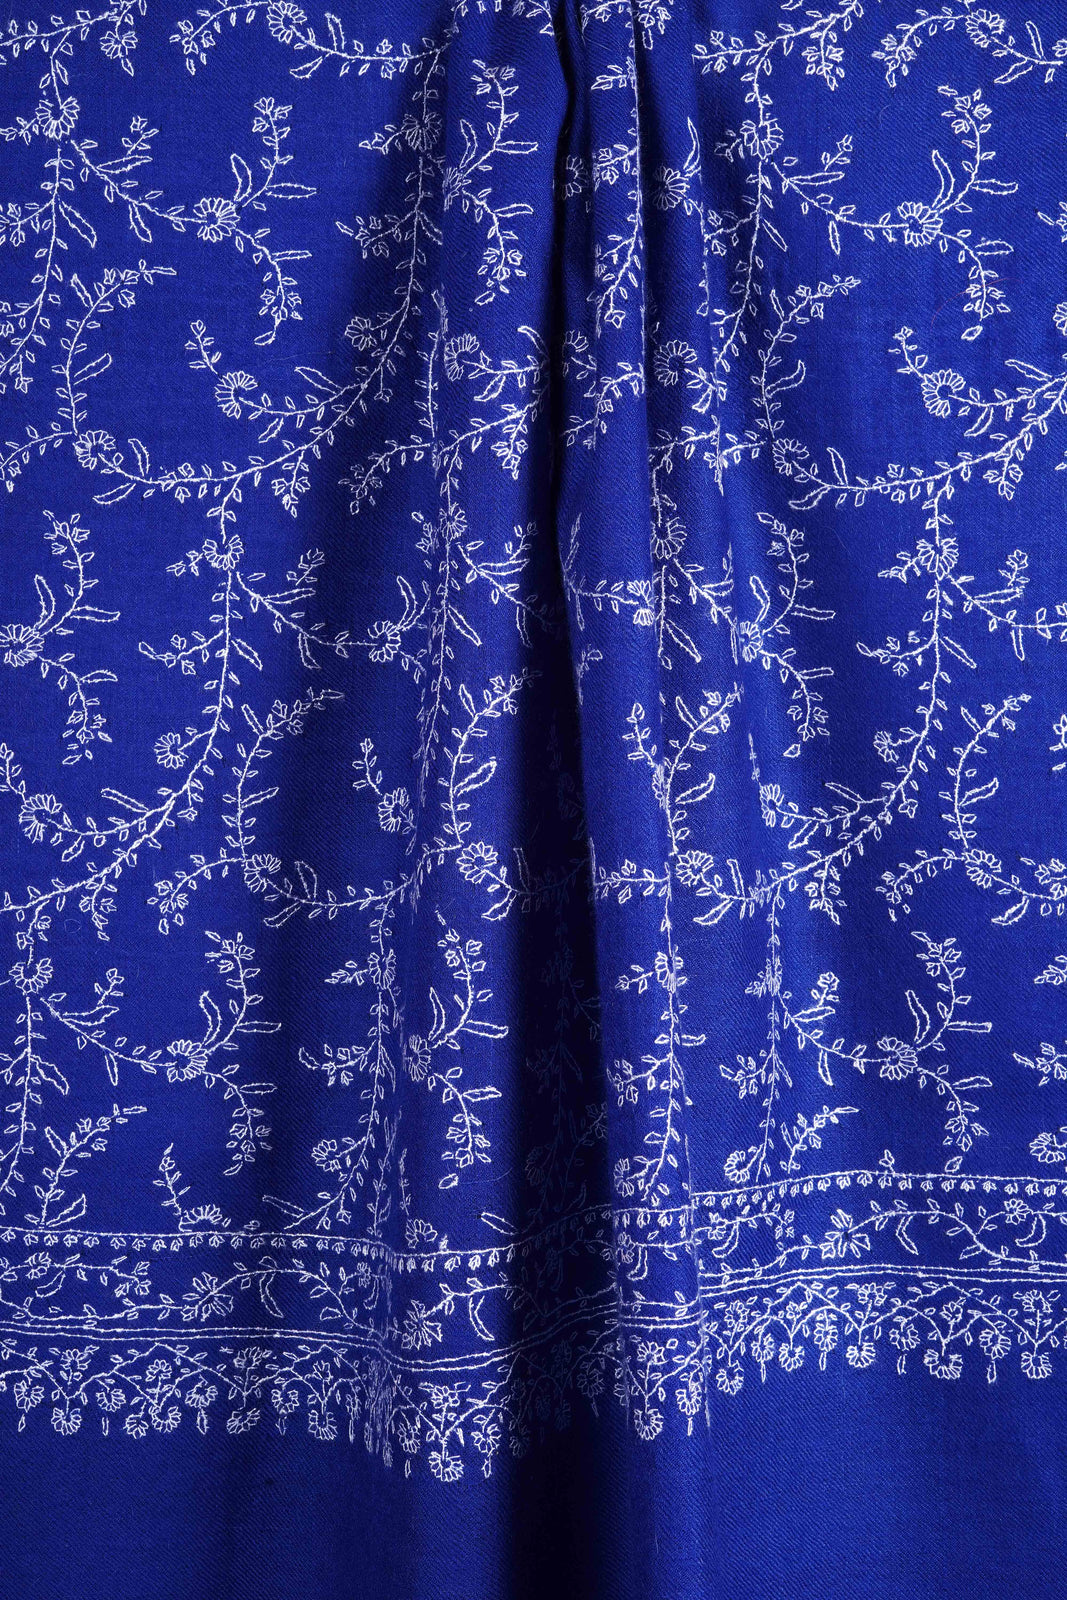 Blue Jali Embroidery Cashmere Pashmina Scarf